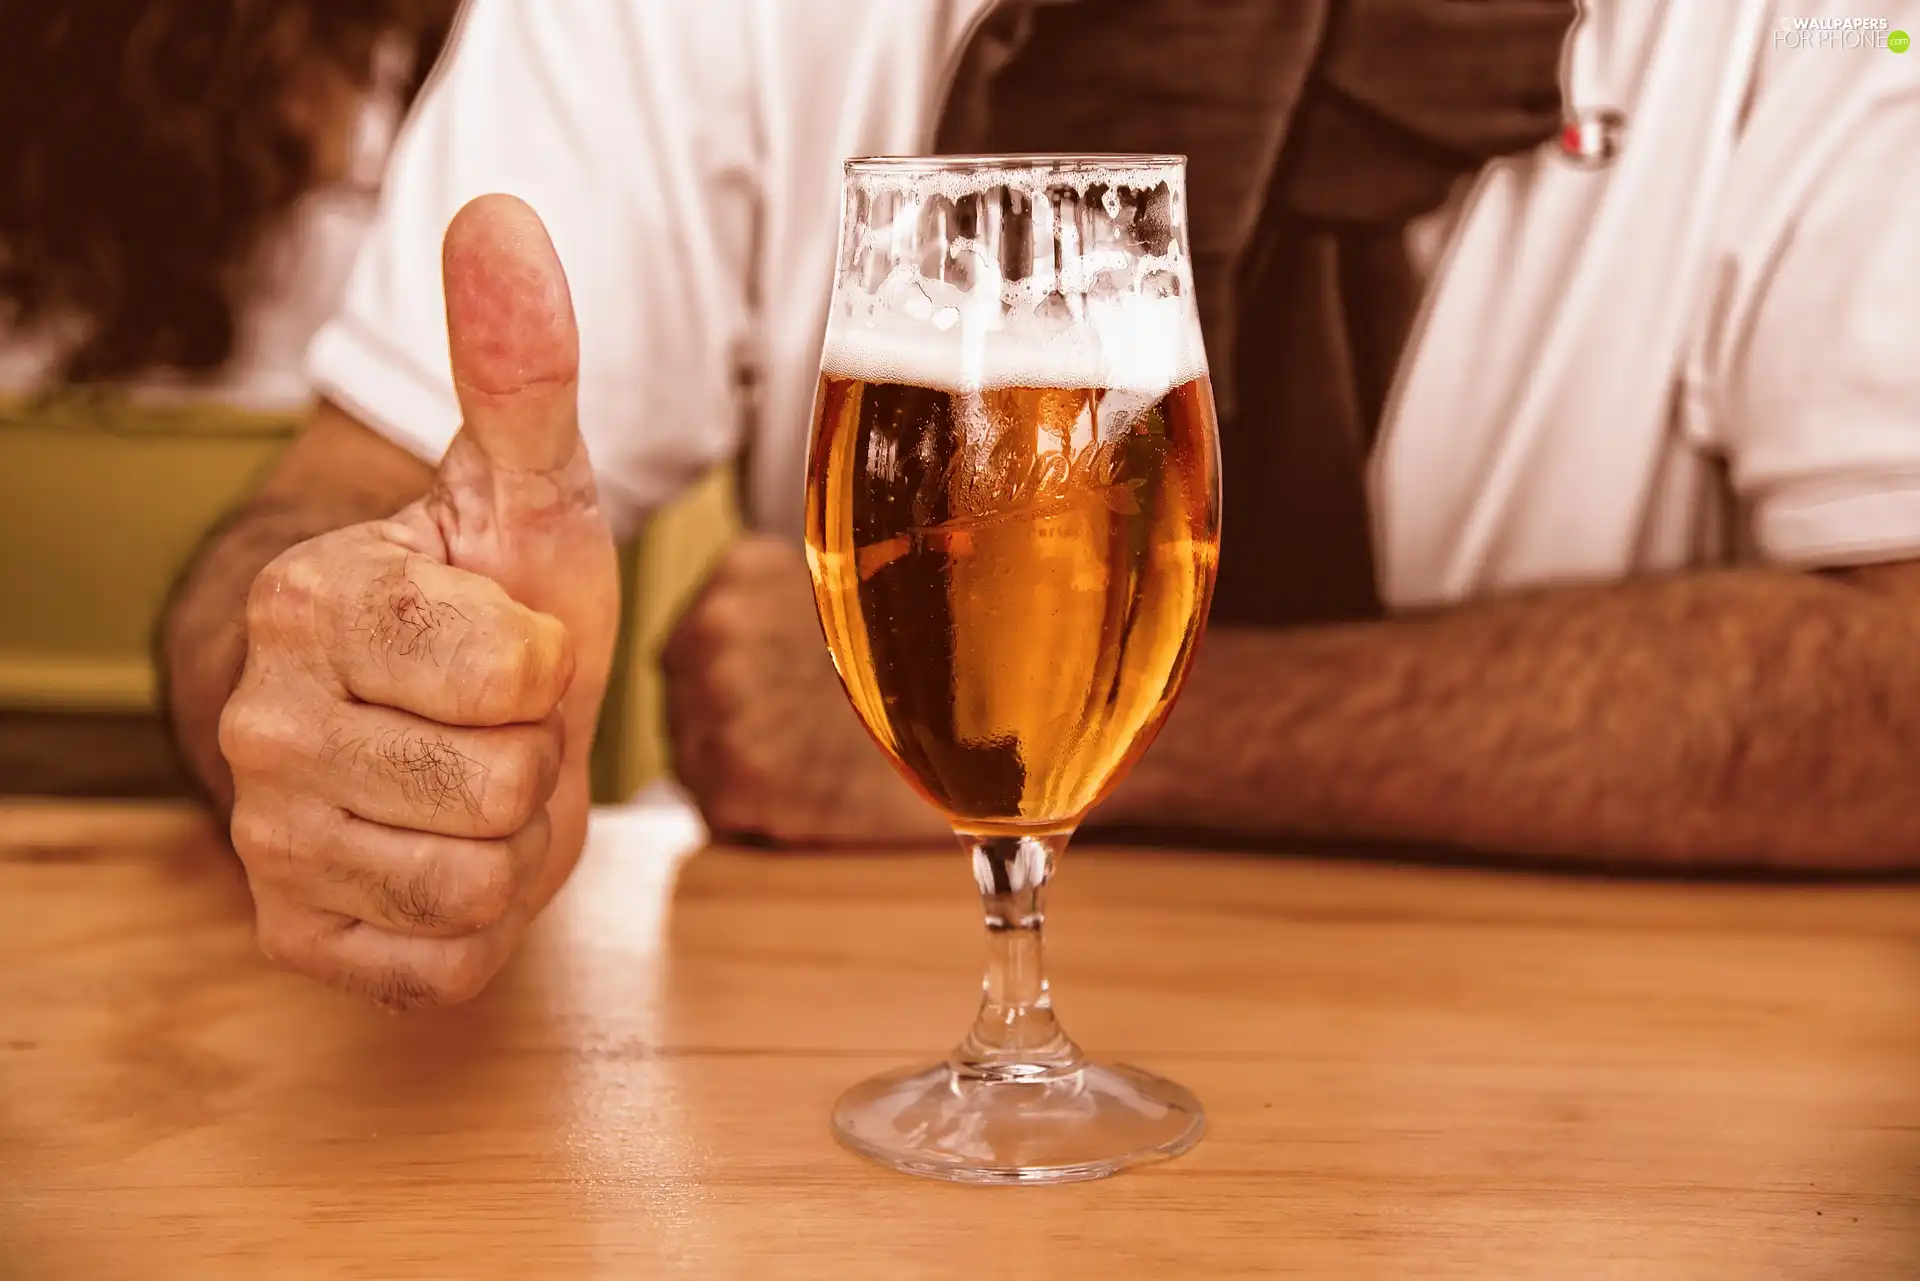 Beer, beer glass, thumb, blade, hands, glass